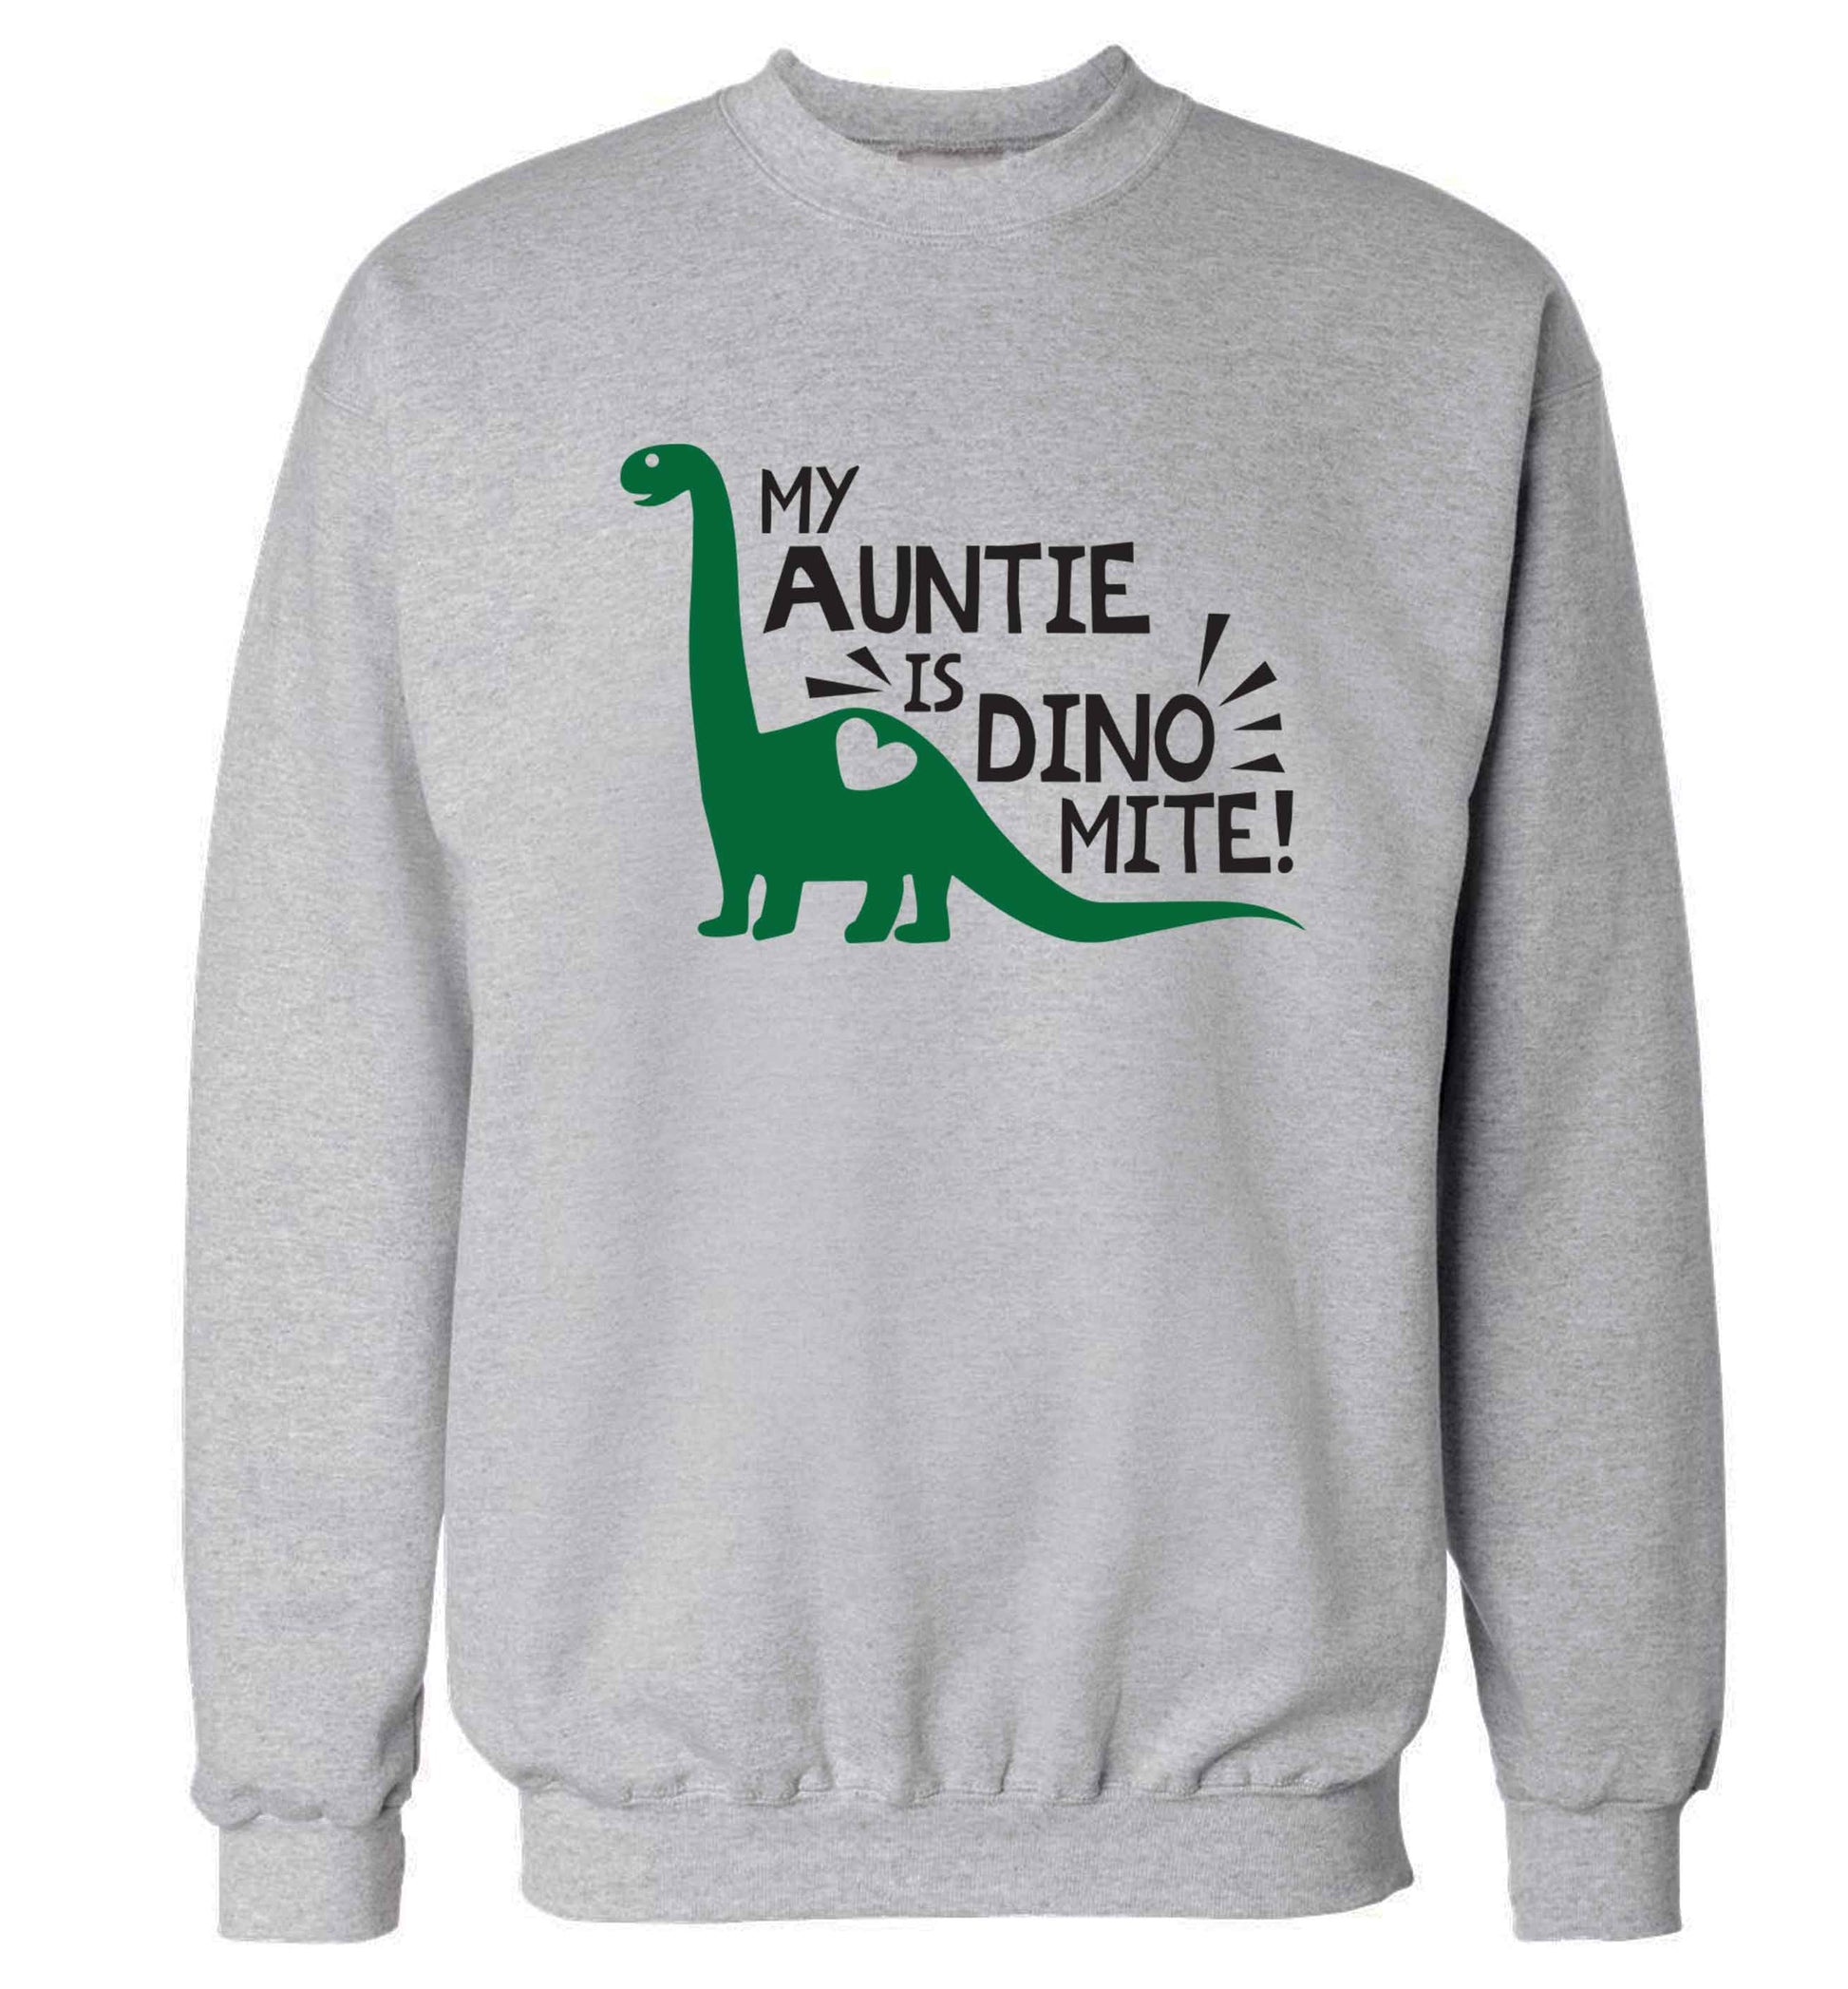 My auntie is dinomite! Adult's unisex grey Sweater 2XL